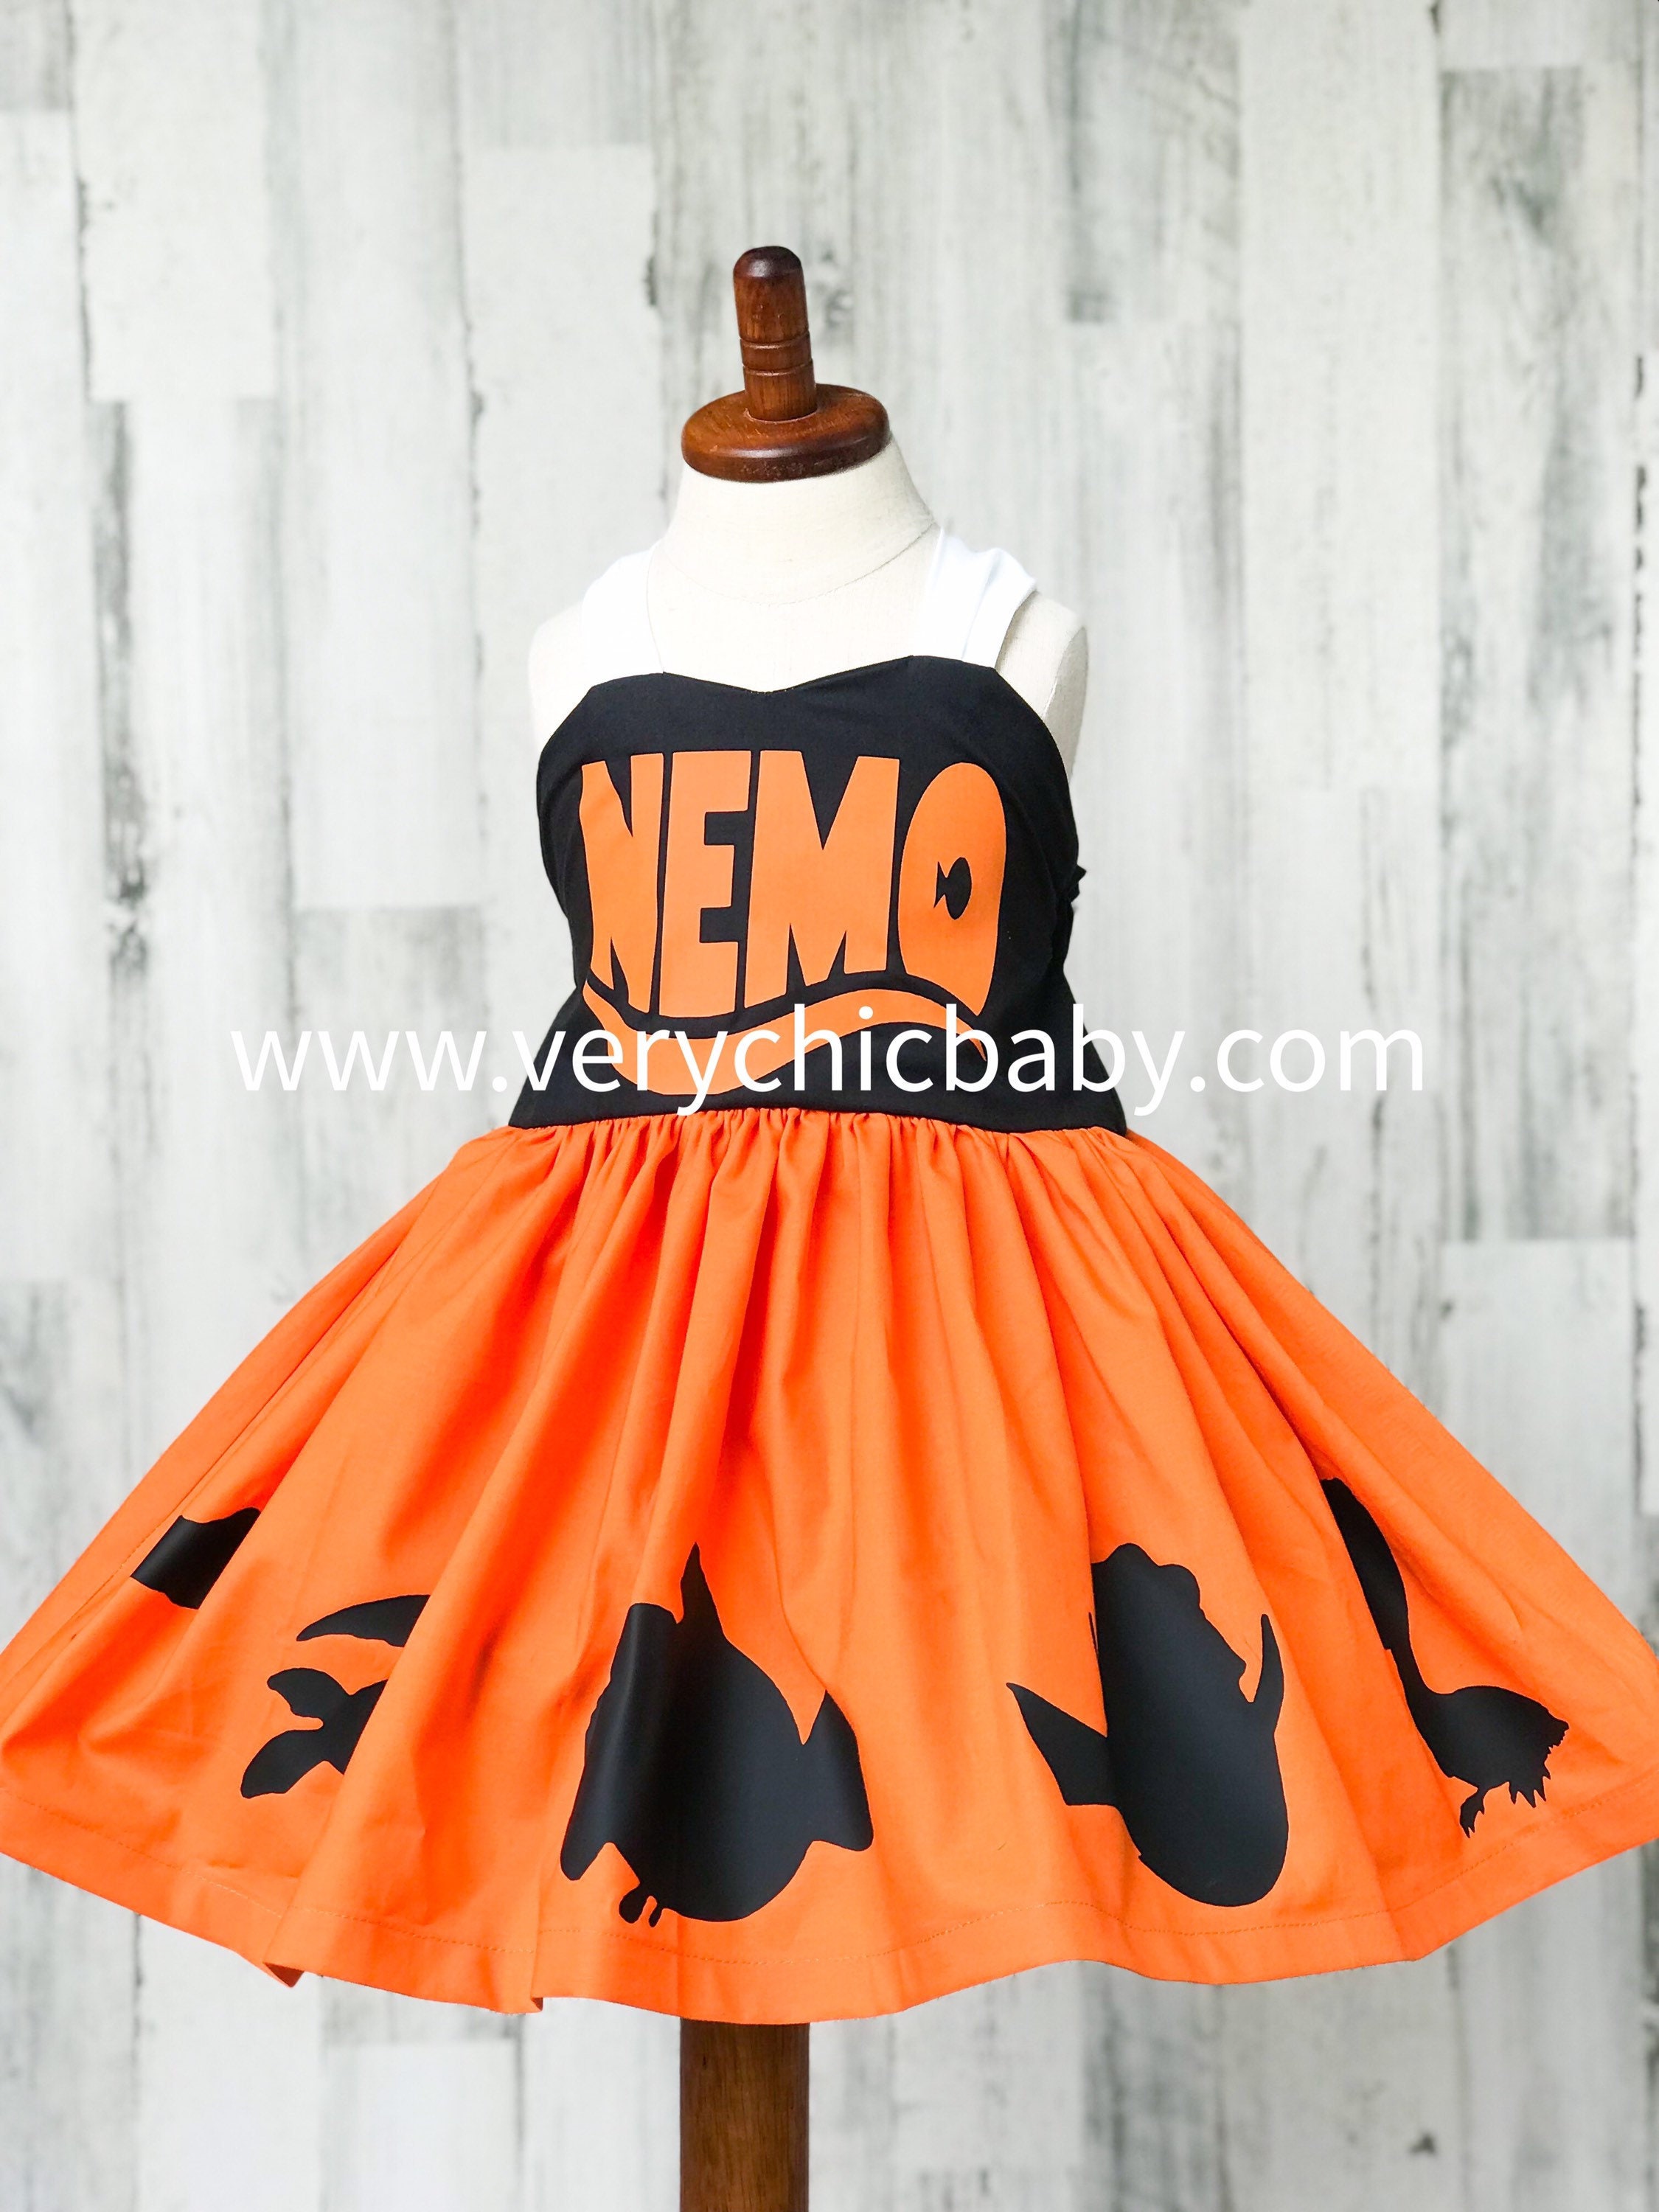 Nemo Birthday Outfit Nemo Party Kleding Meisjeskleding Rokken Finding Dory Dress Nemo Dress Finding Nemo Baby Shower Nemo for Baby Finding Dory Party Dory Birthday 